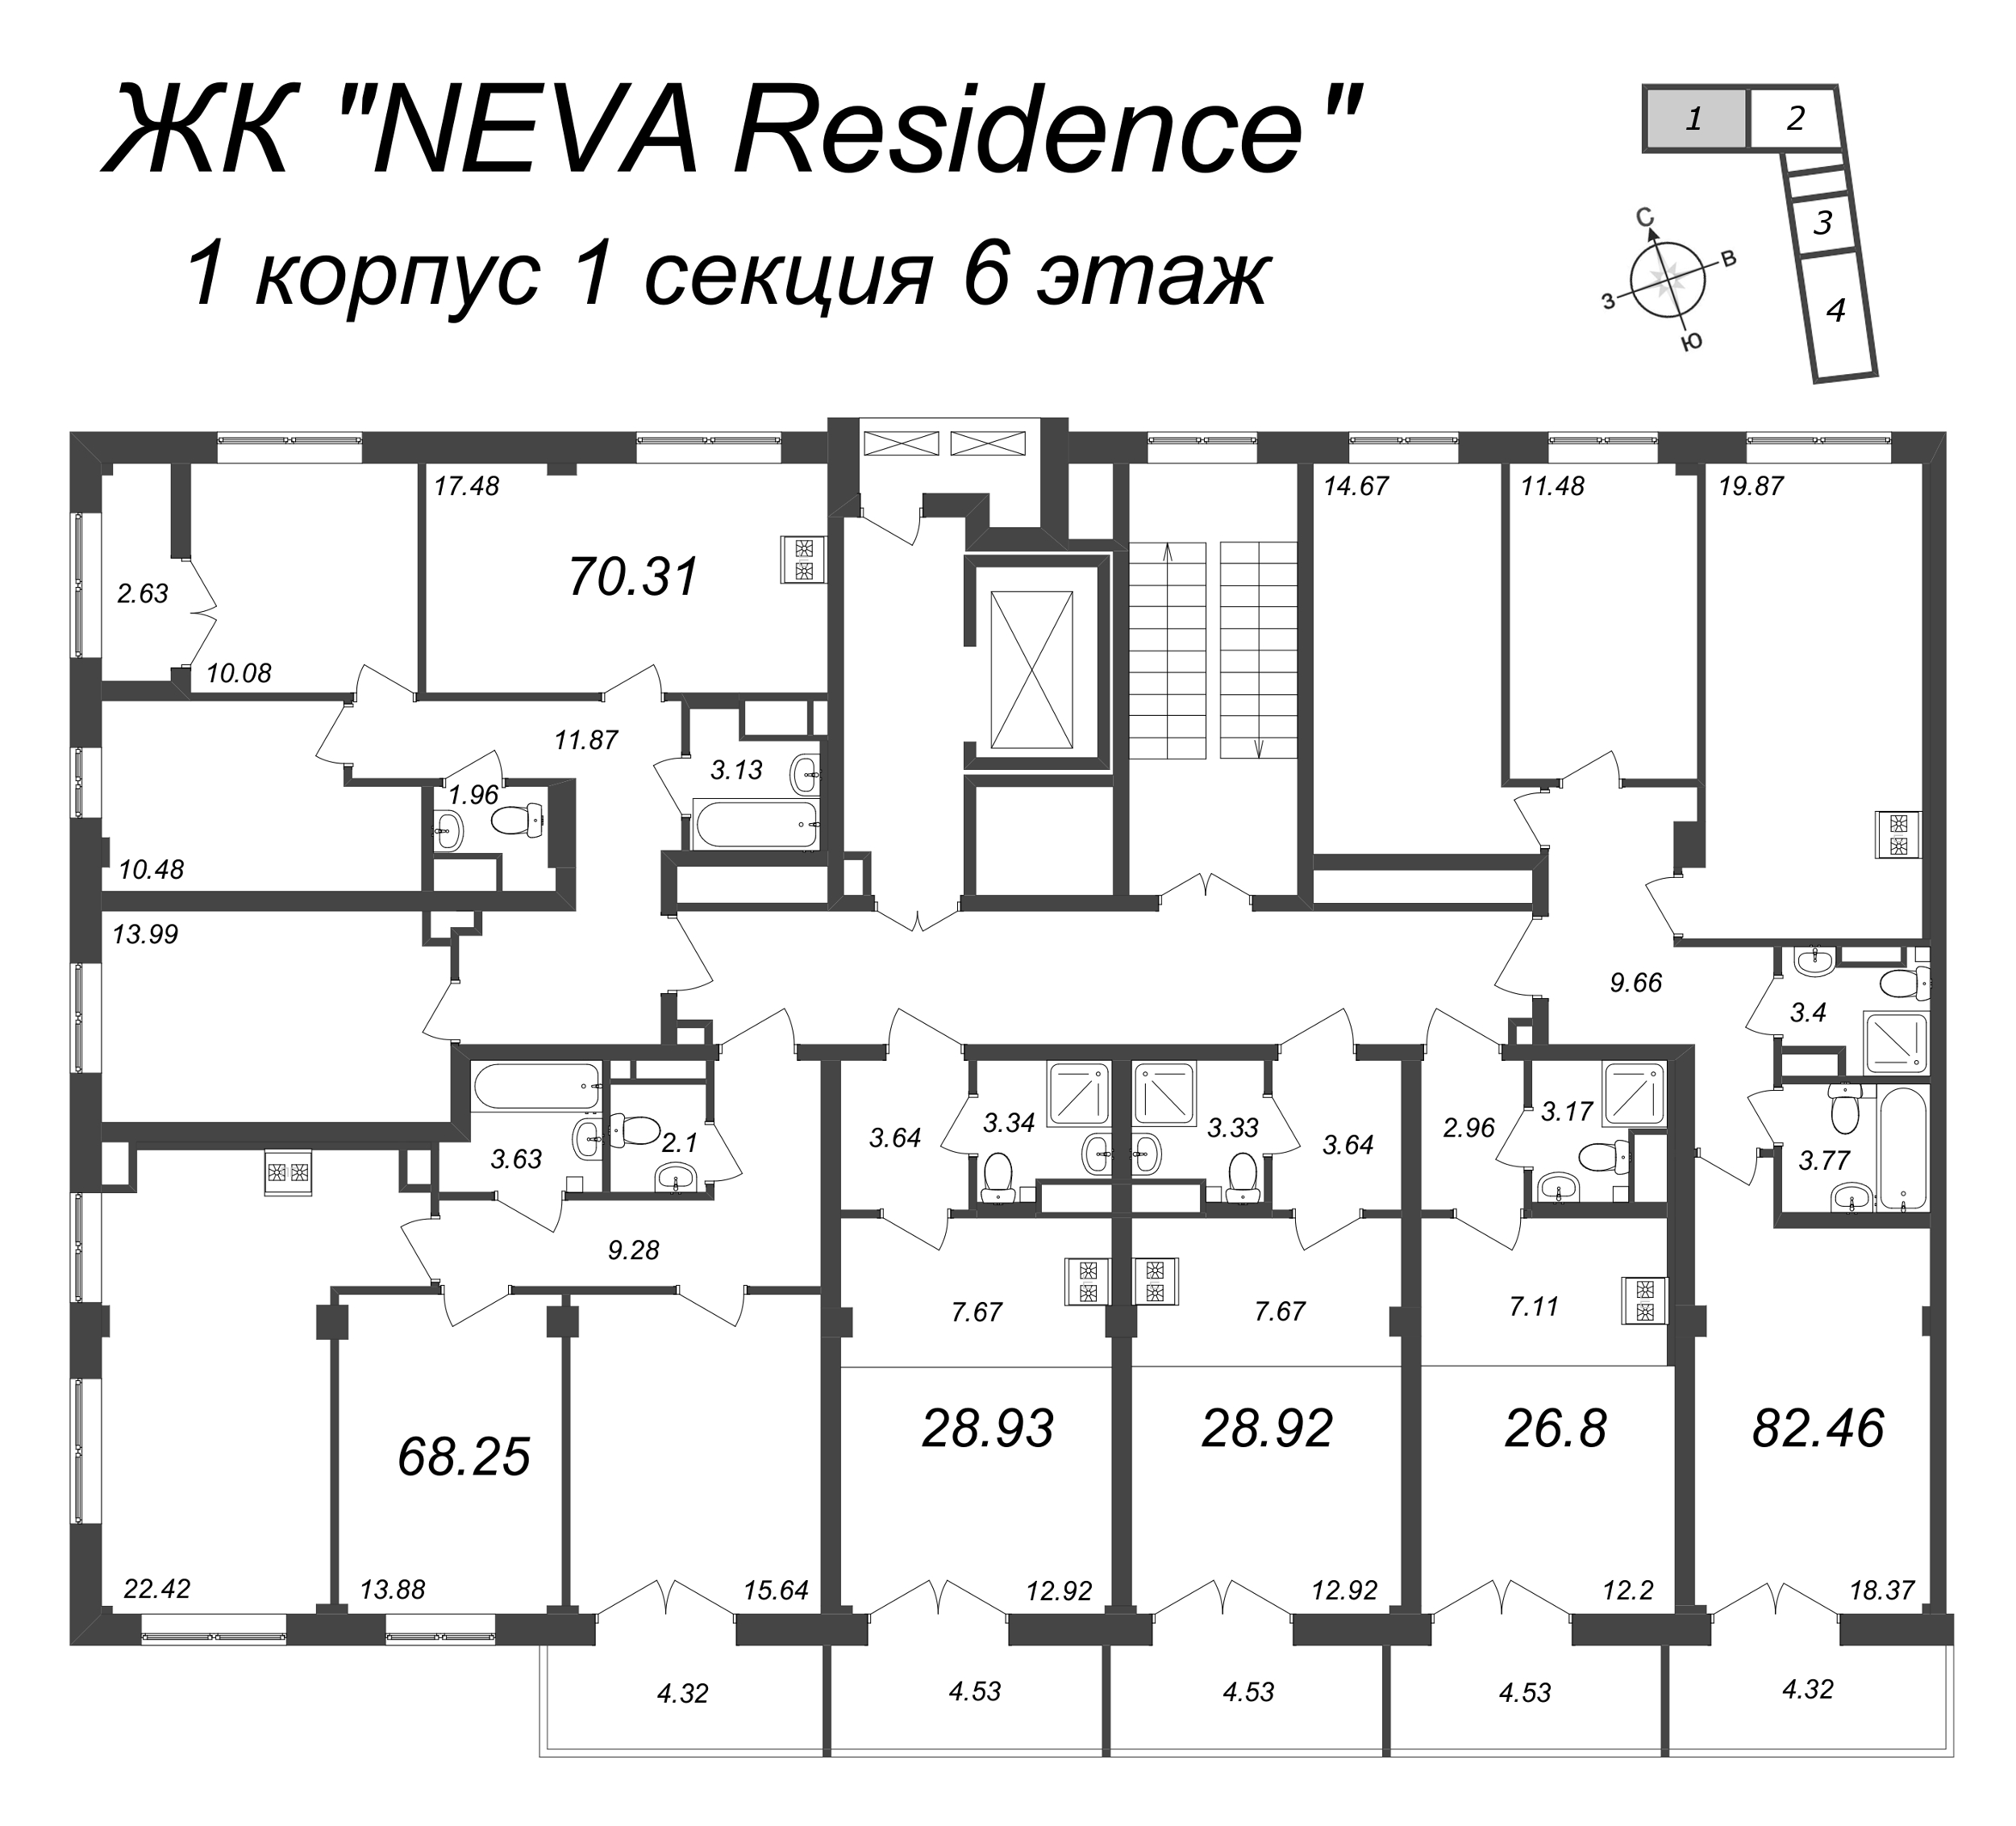 4-комнатная (Евро) квартира, 70.31 м² - планировка этажа